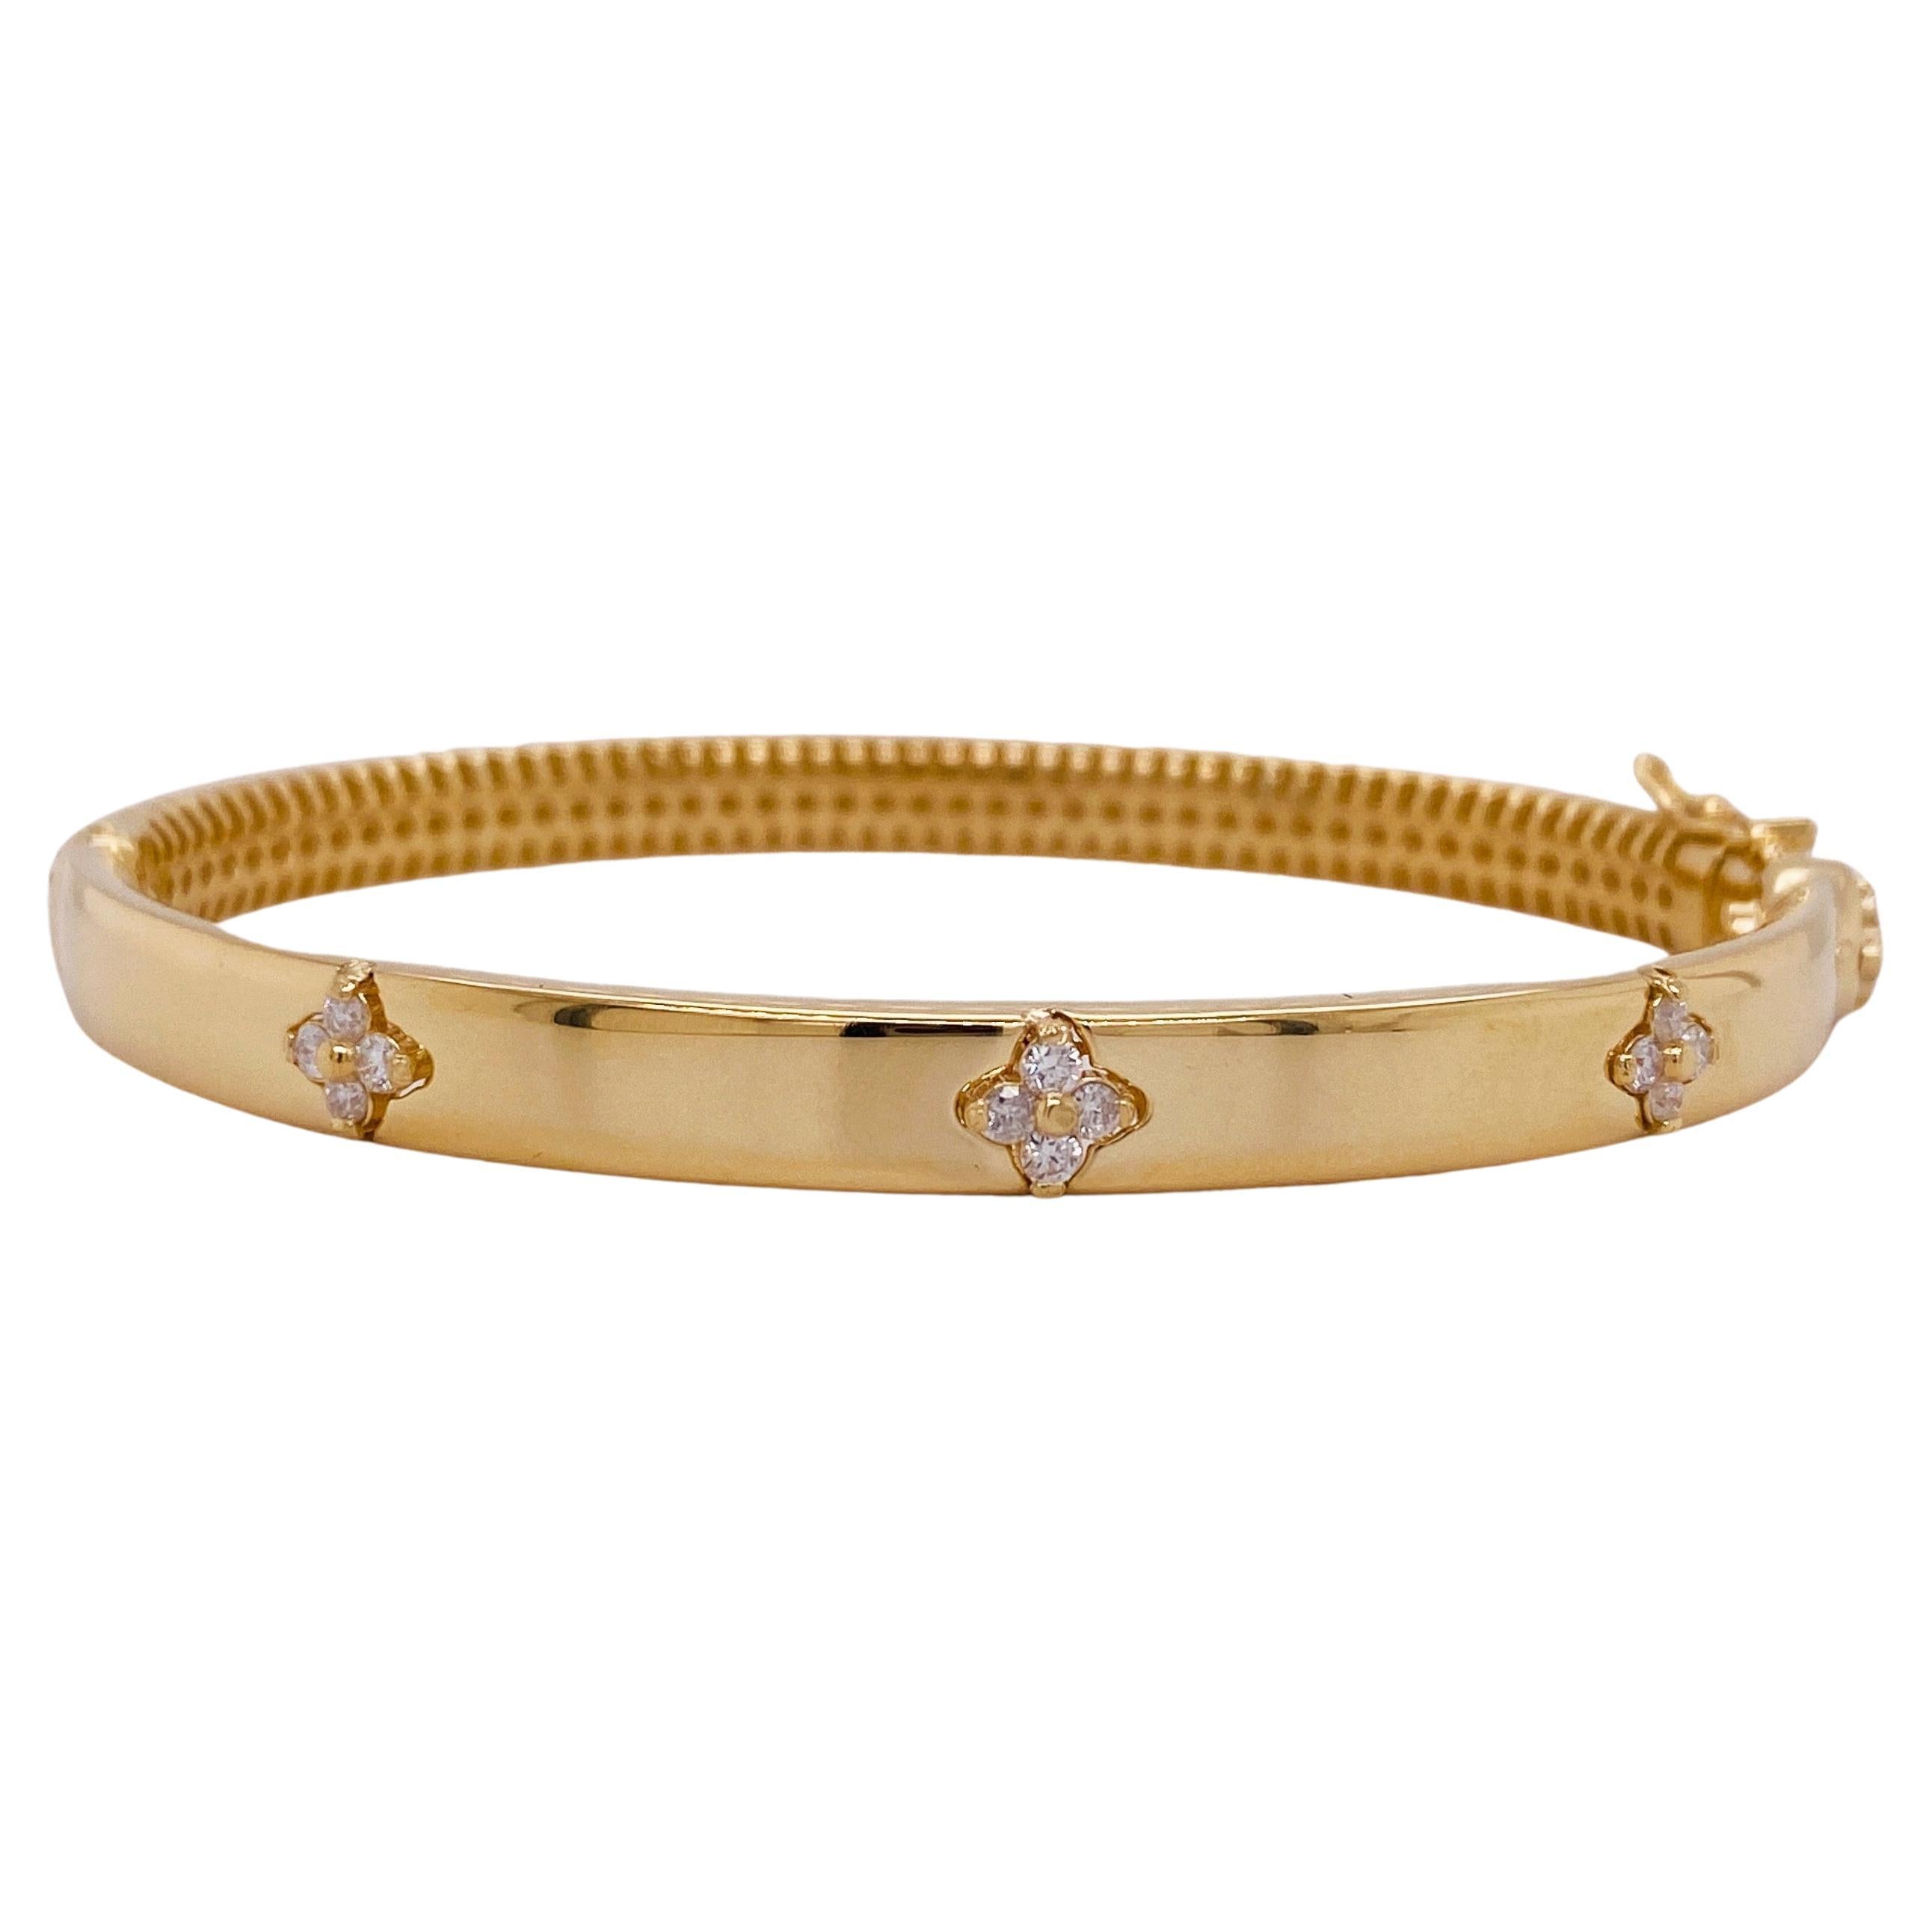 Bracelet Louis Vuitton, Idylle, breloques, gold yellow, white gold,  pearls.